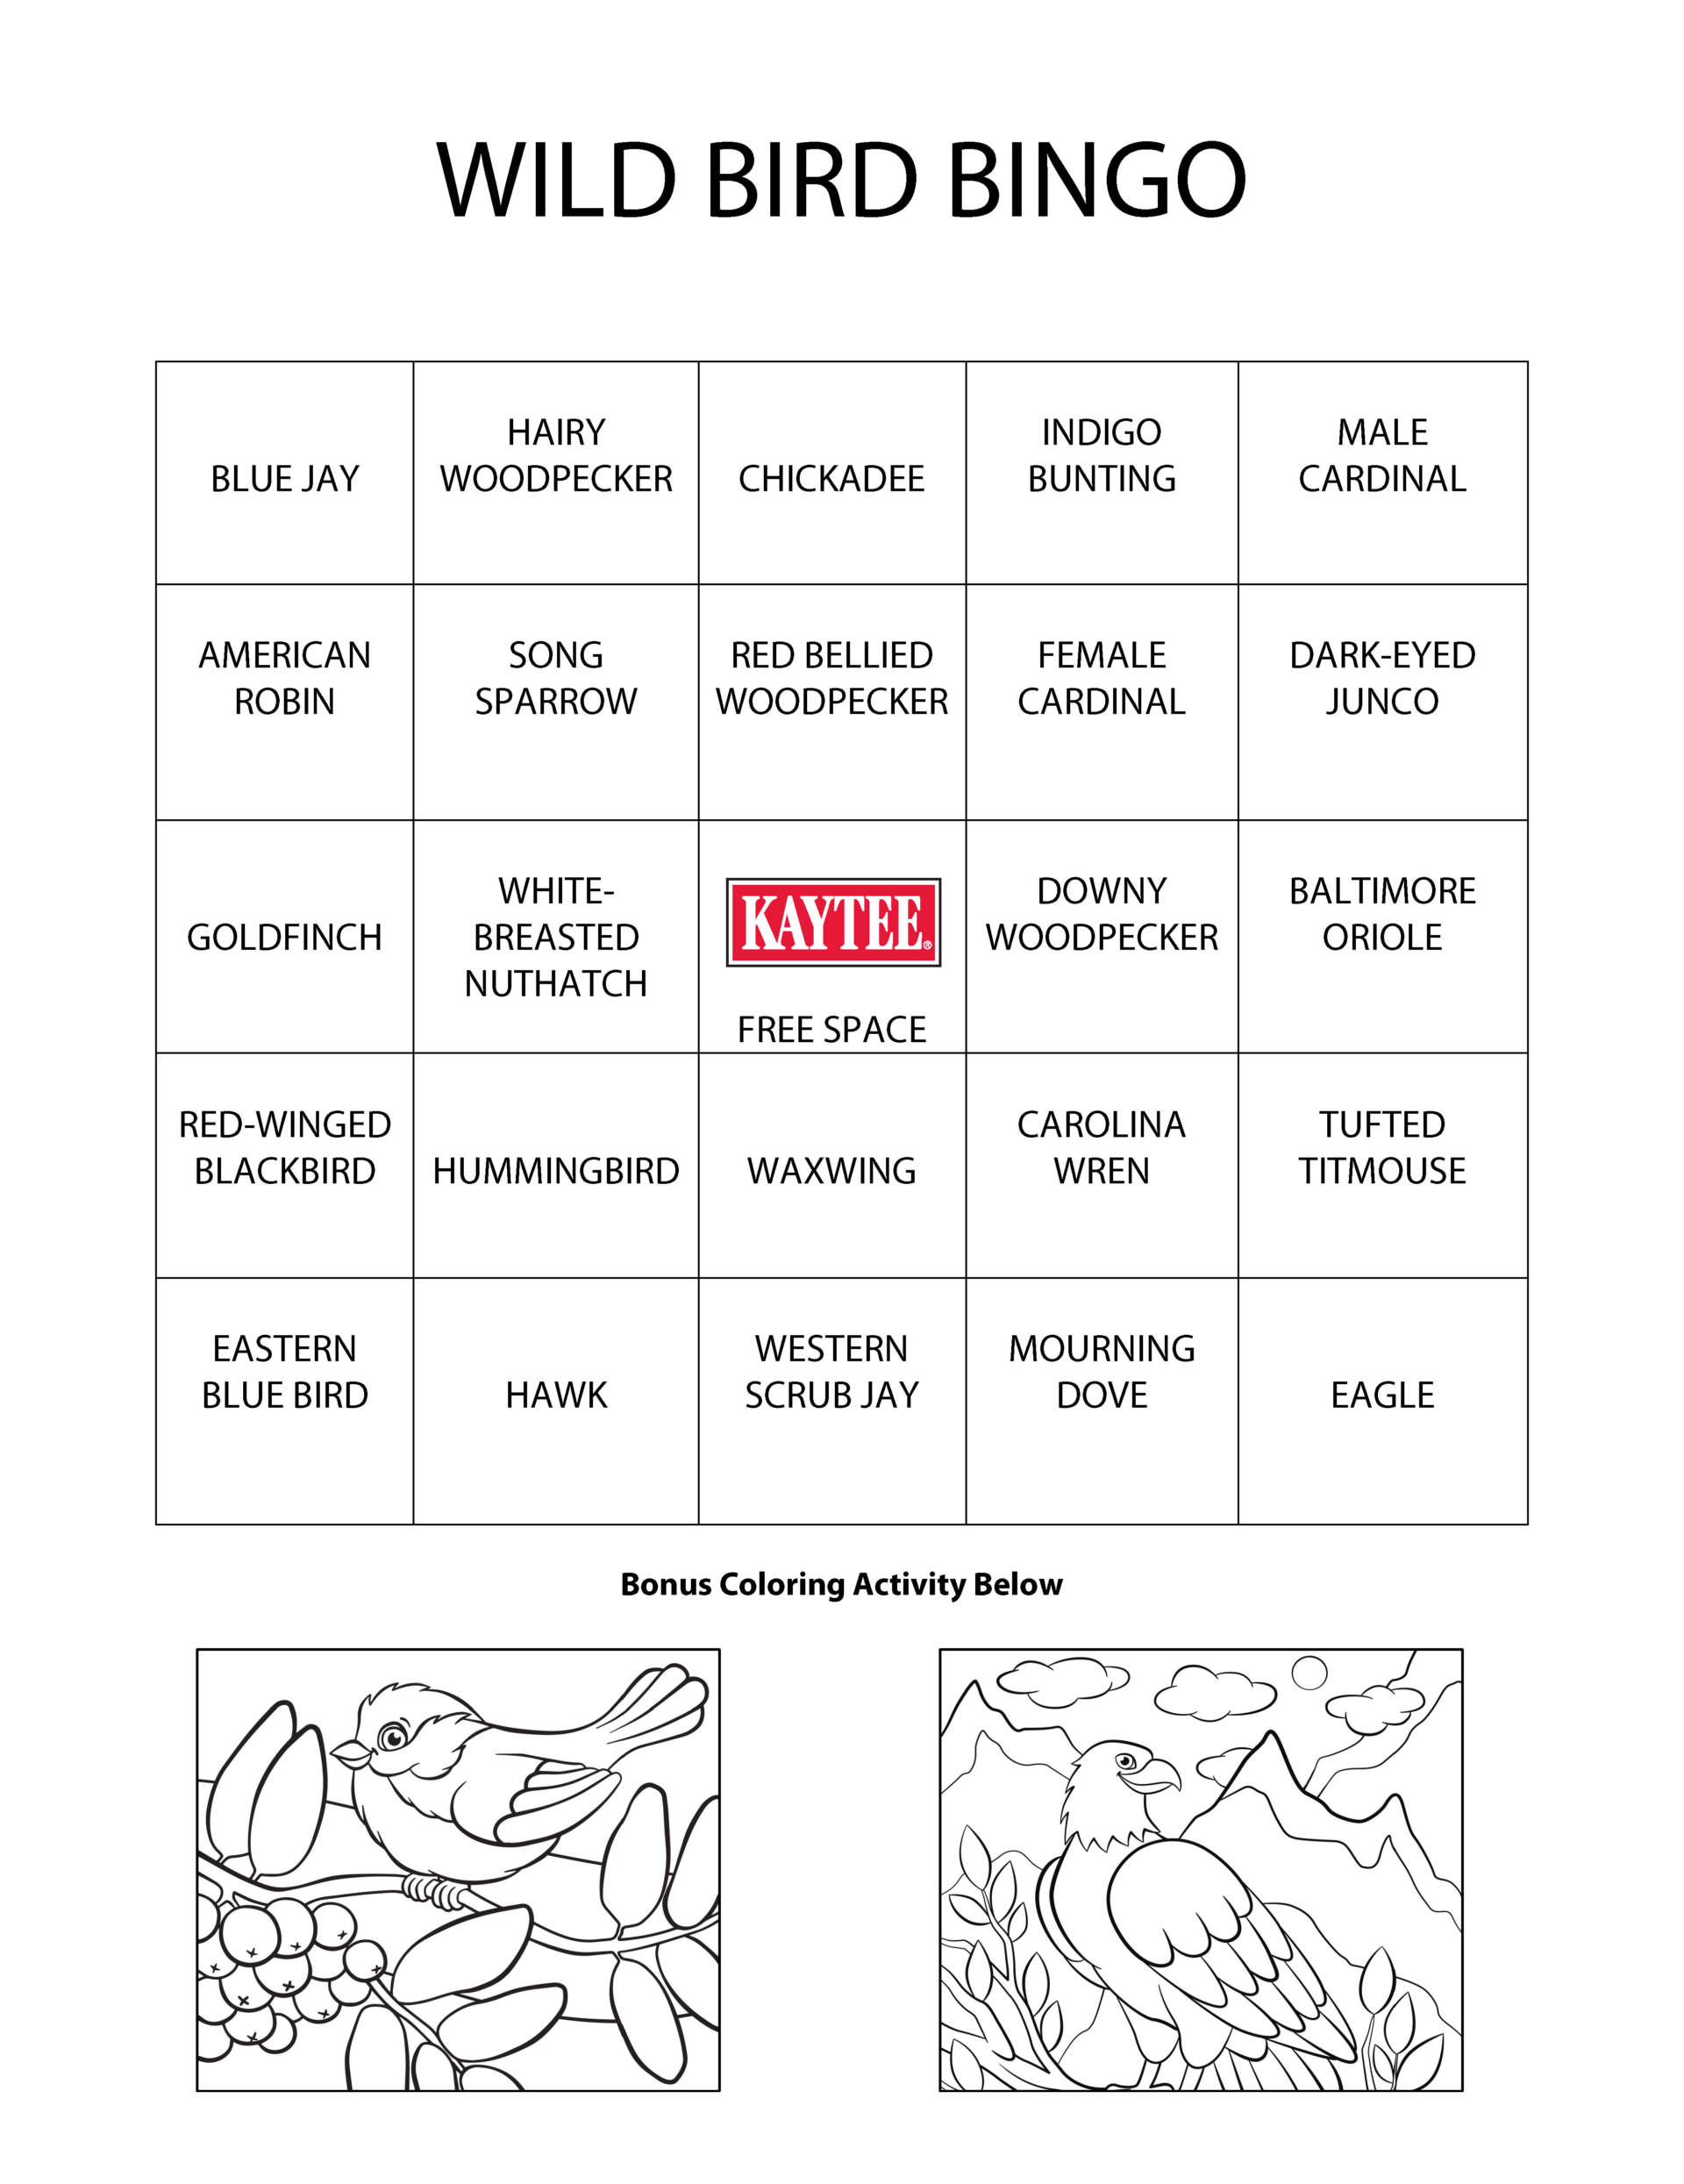 Wild Bird Bingo Game Sheet